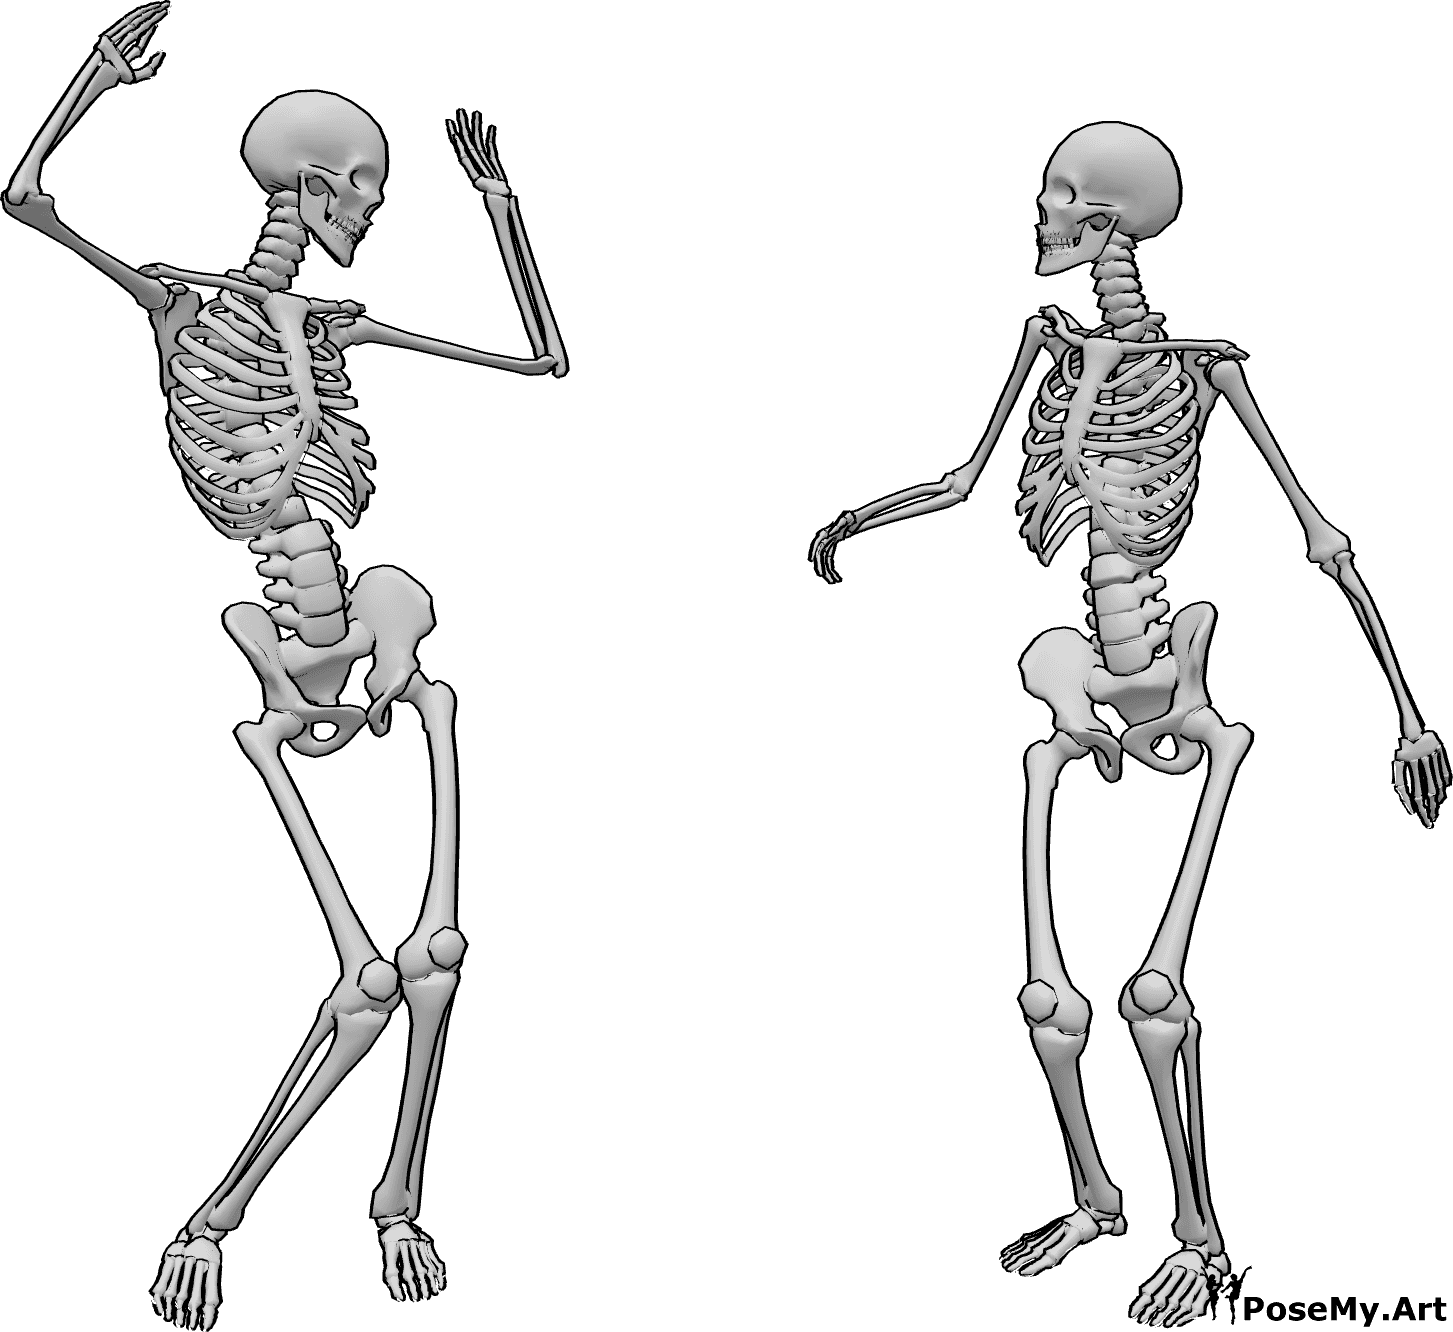 Pose Reference- Dancing skeletons pose - Two skeletons are dancing pose